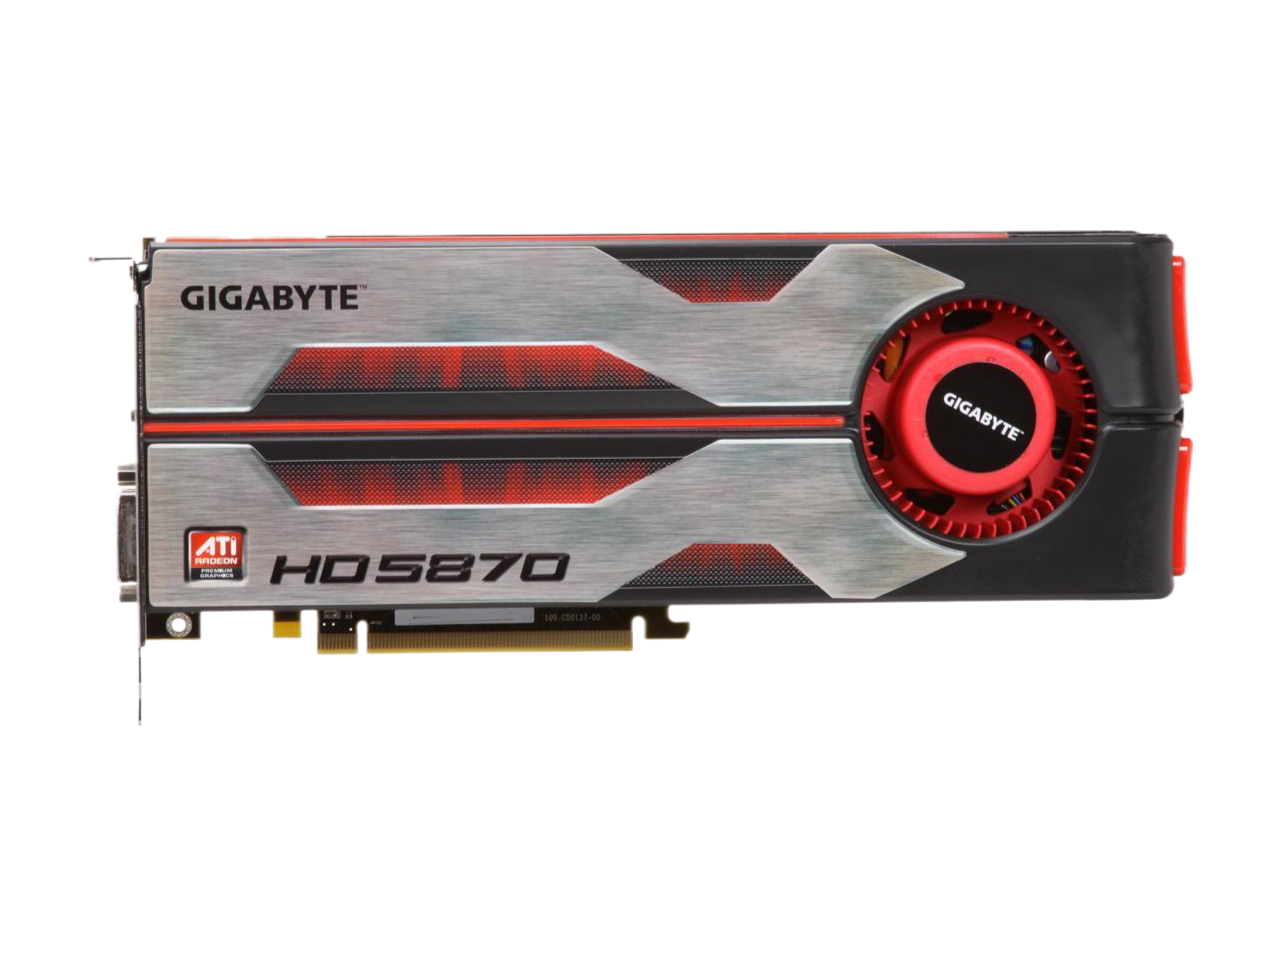 GIGABYTE Radeon HD 5870 (Cypress XT) 1GB 256-bit GDDR5 PCI Express 2.0 x16 HDCP Ready CrossFire Supported Video Card w/ATI Eyefinity GV-R587D5-1GD-B